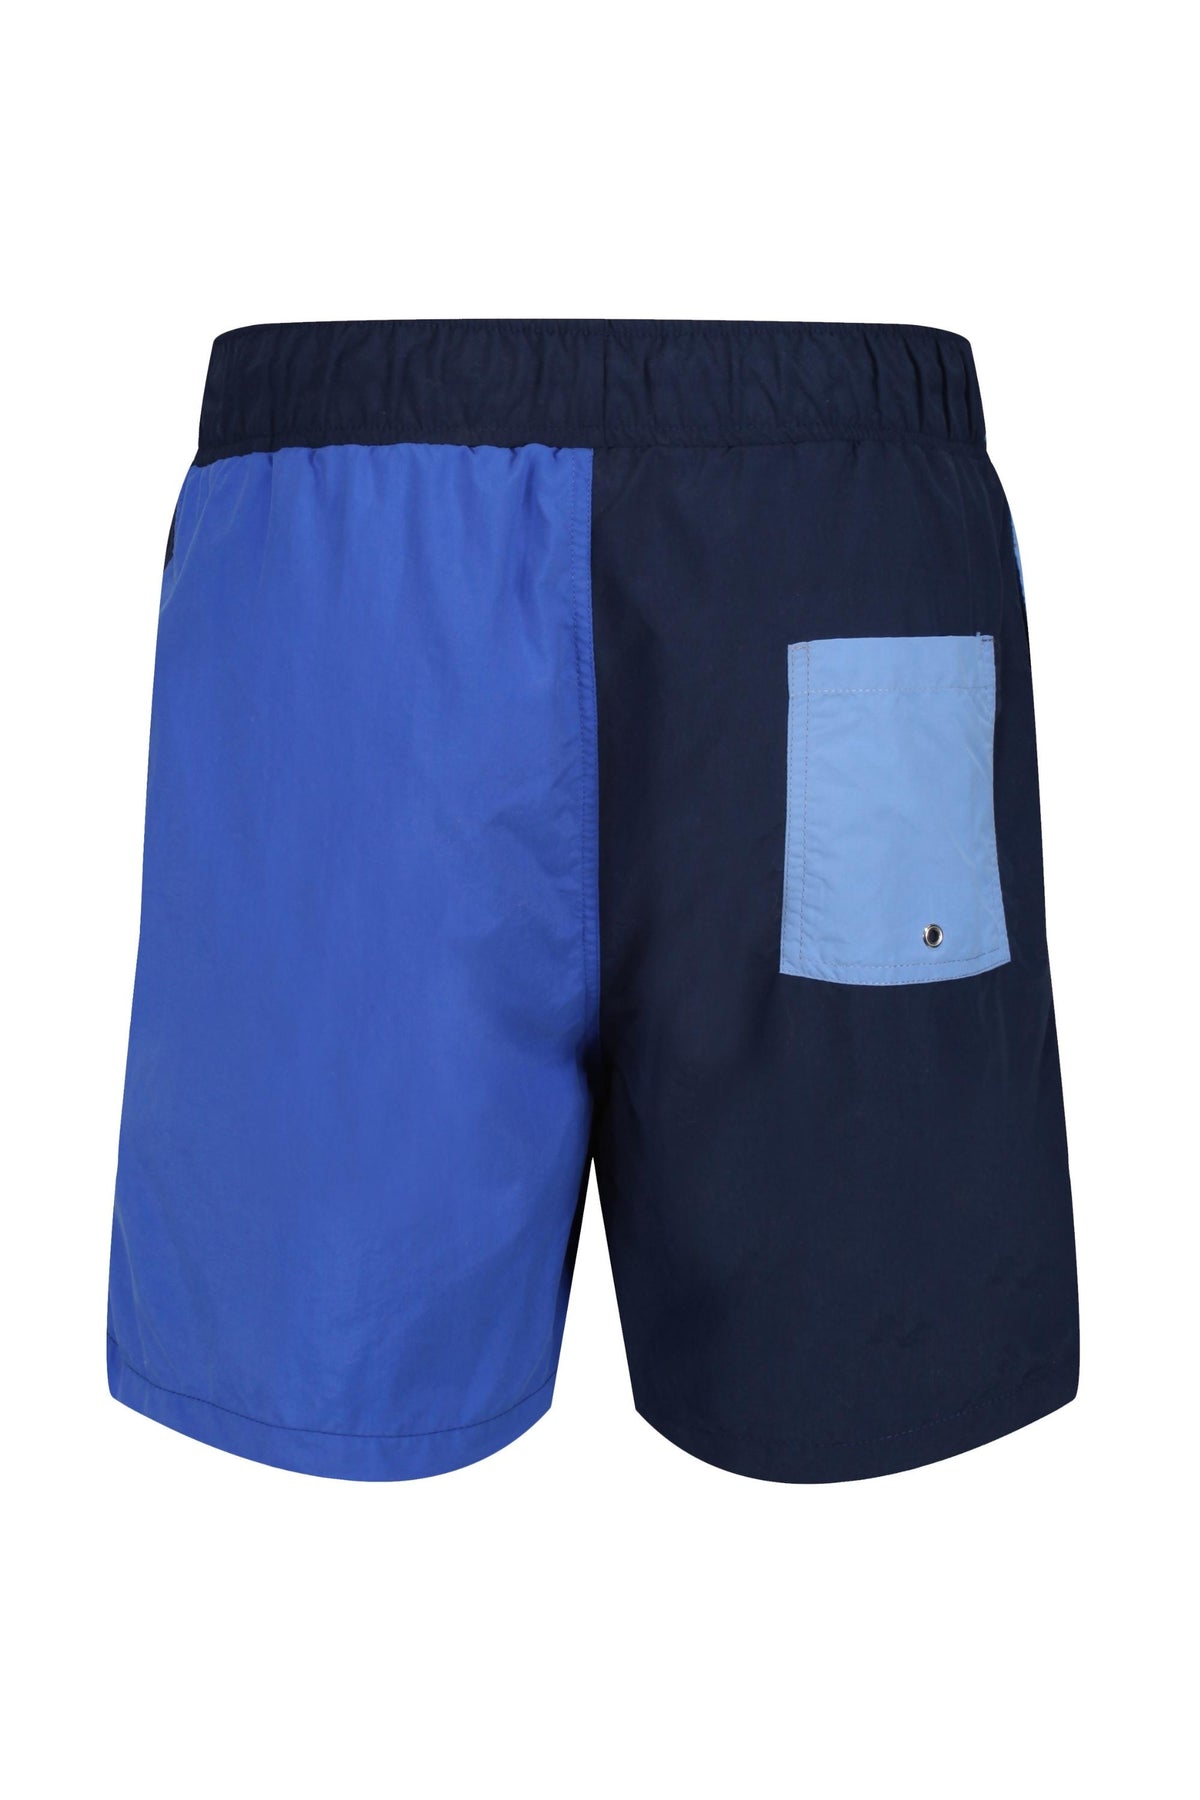 Bordeaux Swim Shorts - Blue - Whale Of A Time Clothing